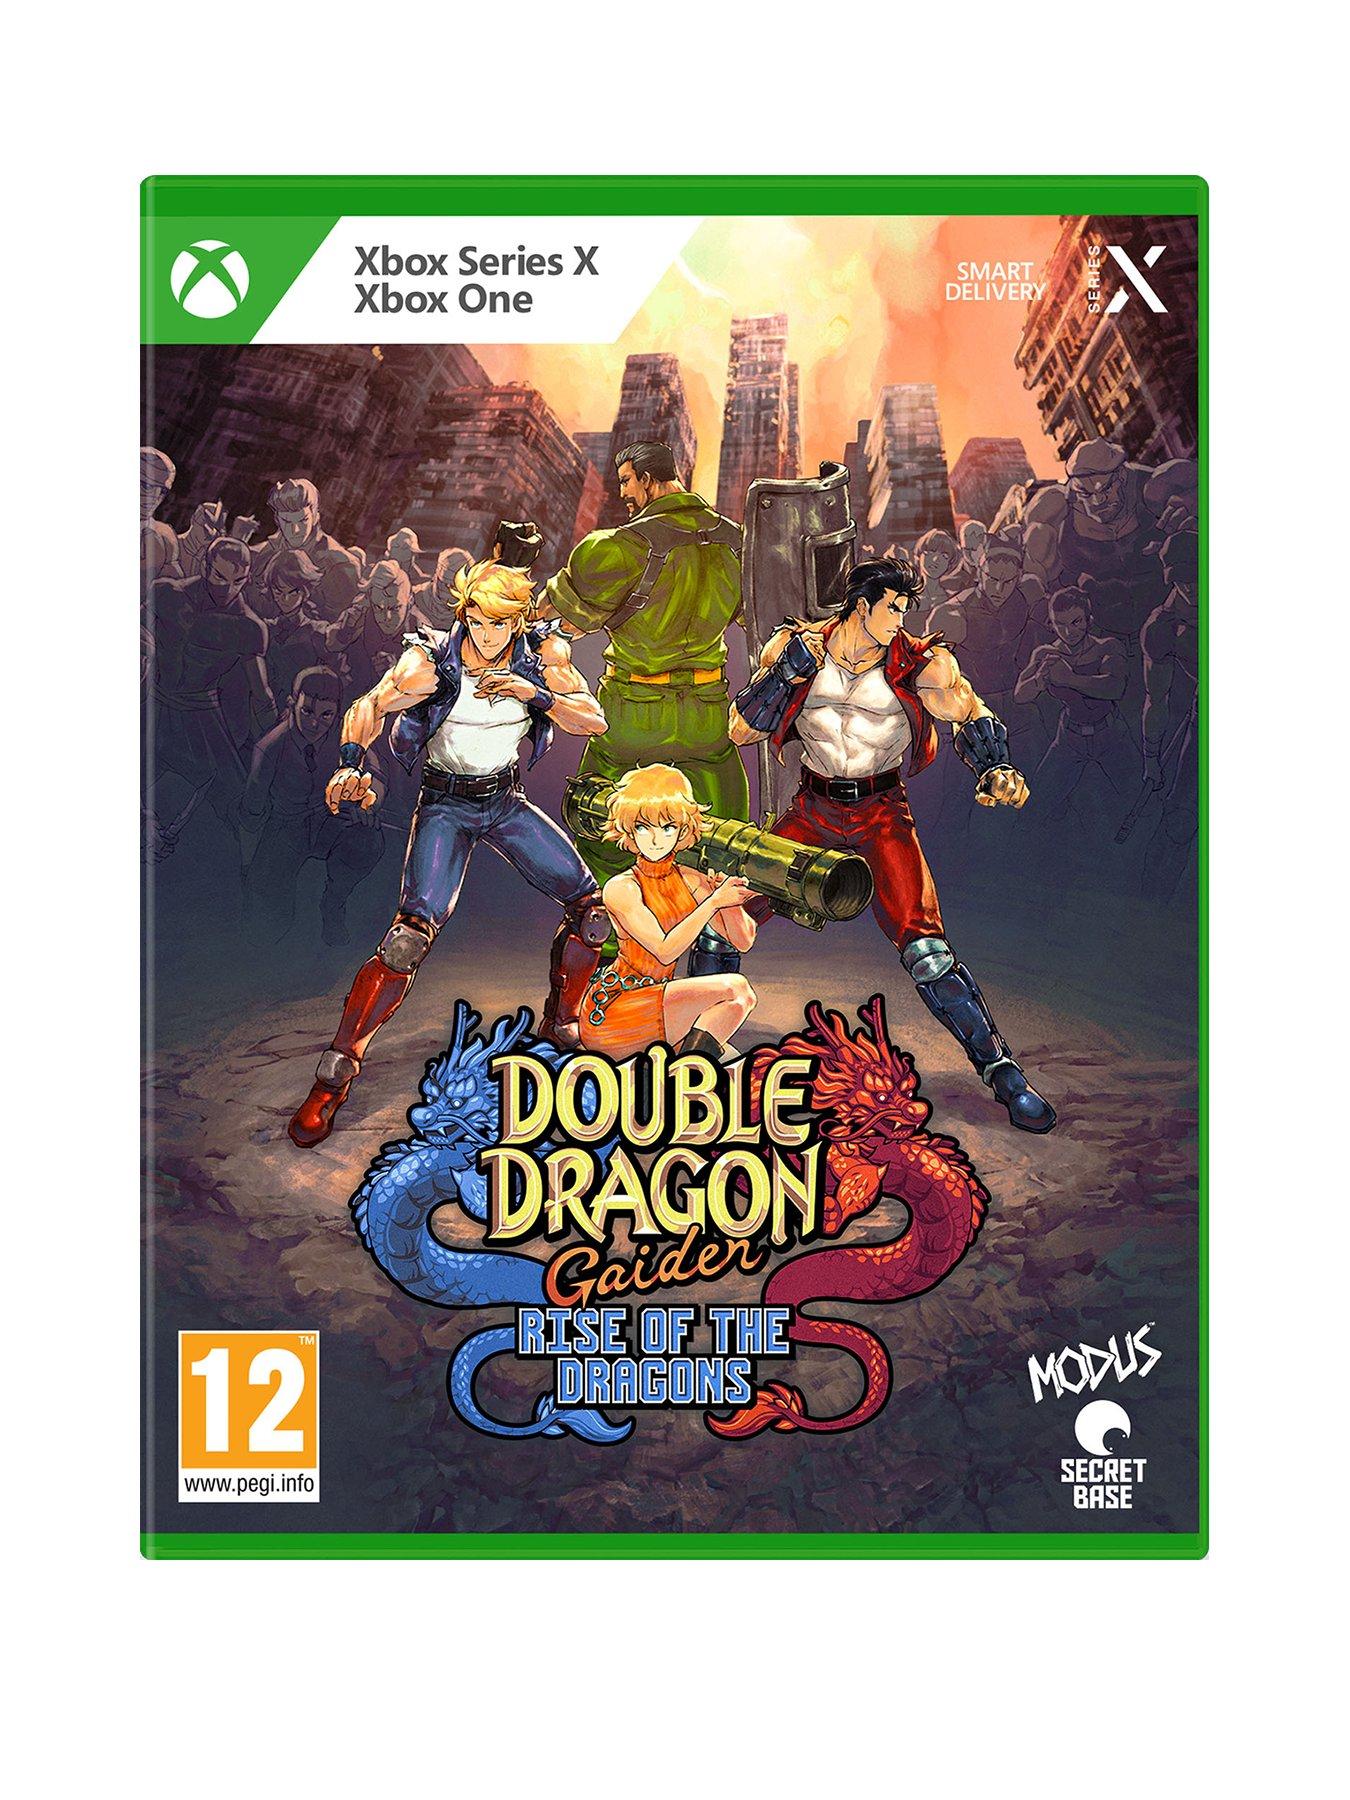 Co-Optimus - Editorial - Co-Op International: Double Dragon II Edition